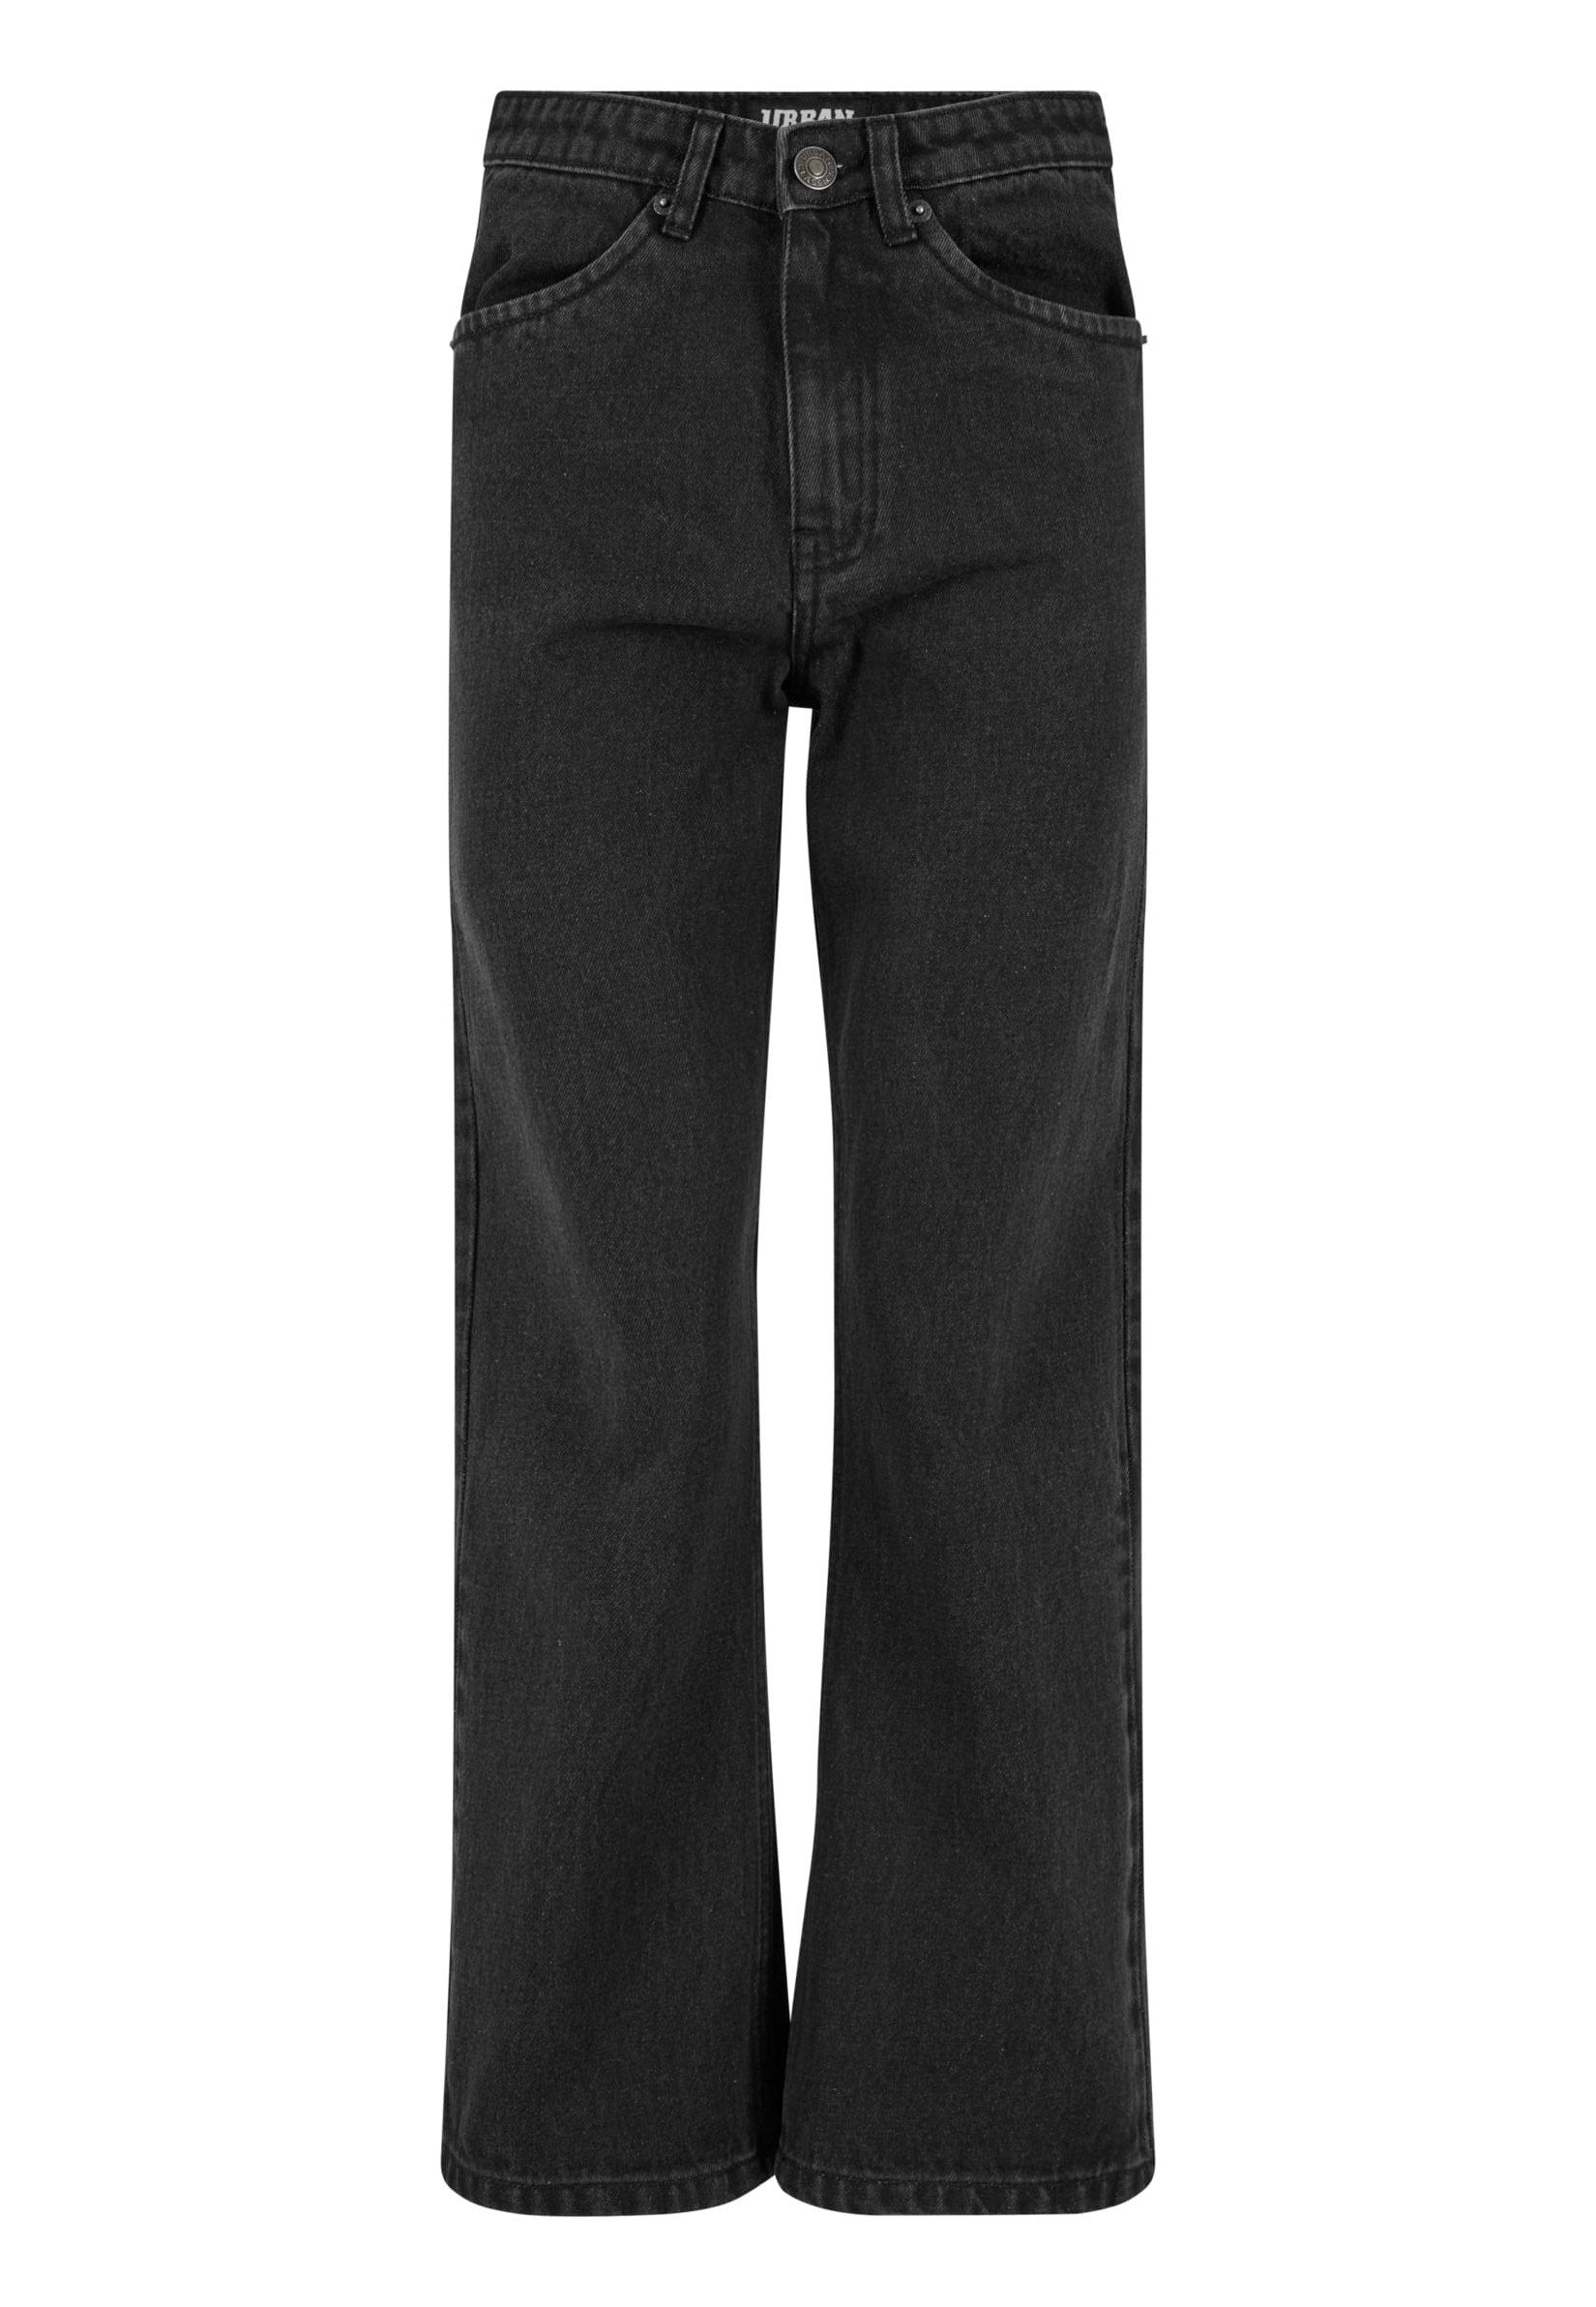 Urban Classics - Ladies Cropped Straight Leg Denim Black Washed - Jeans